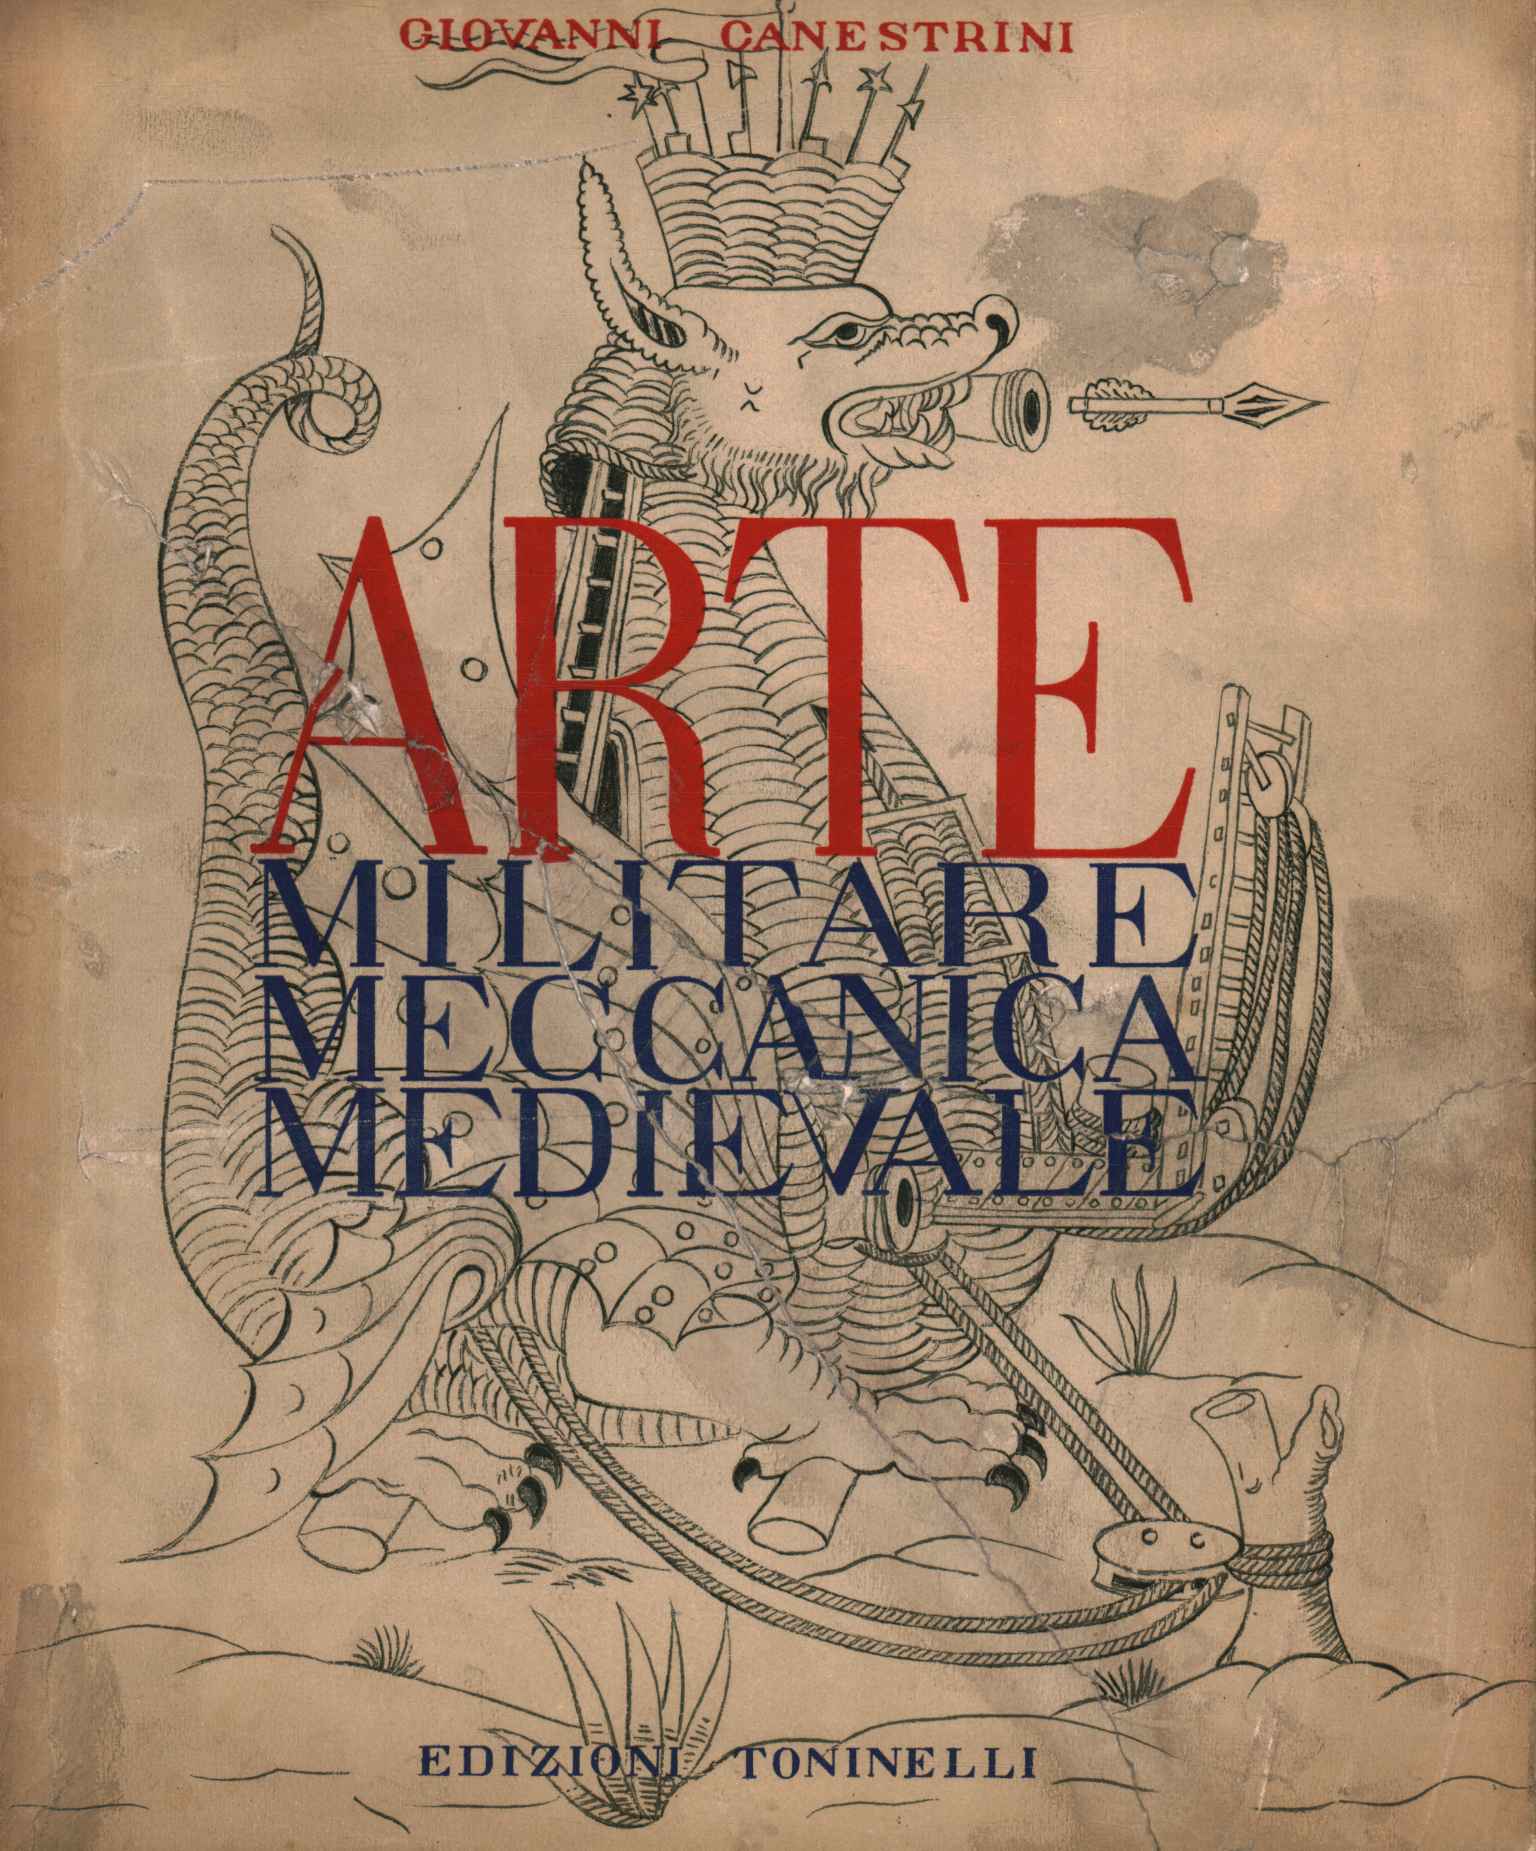 Medieval mechanical military art